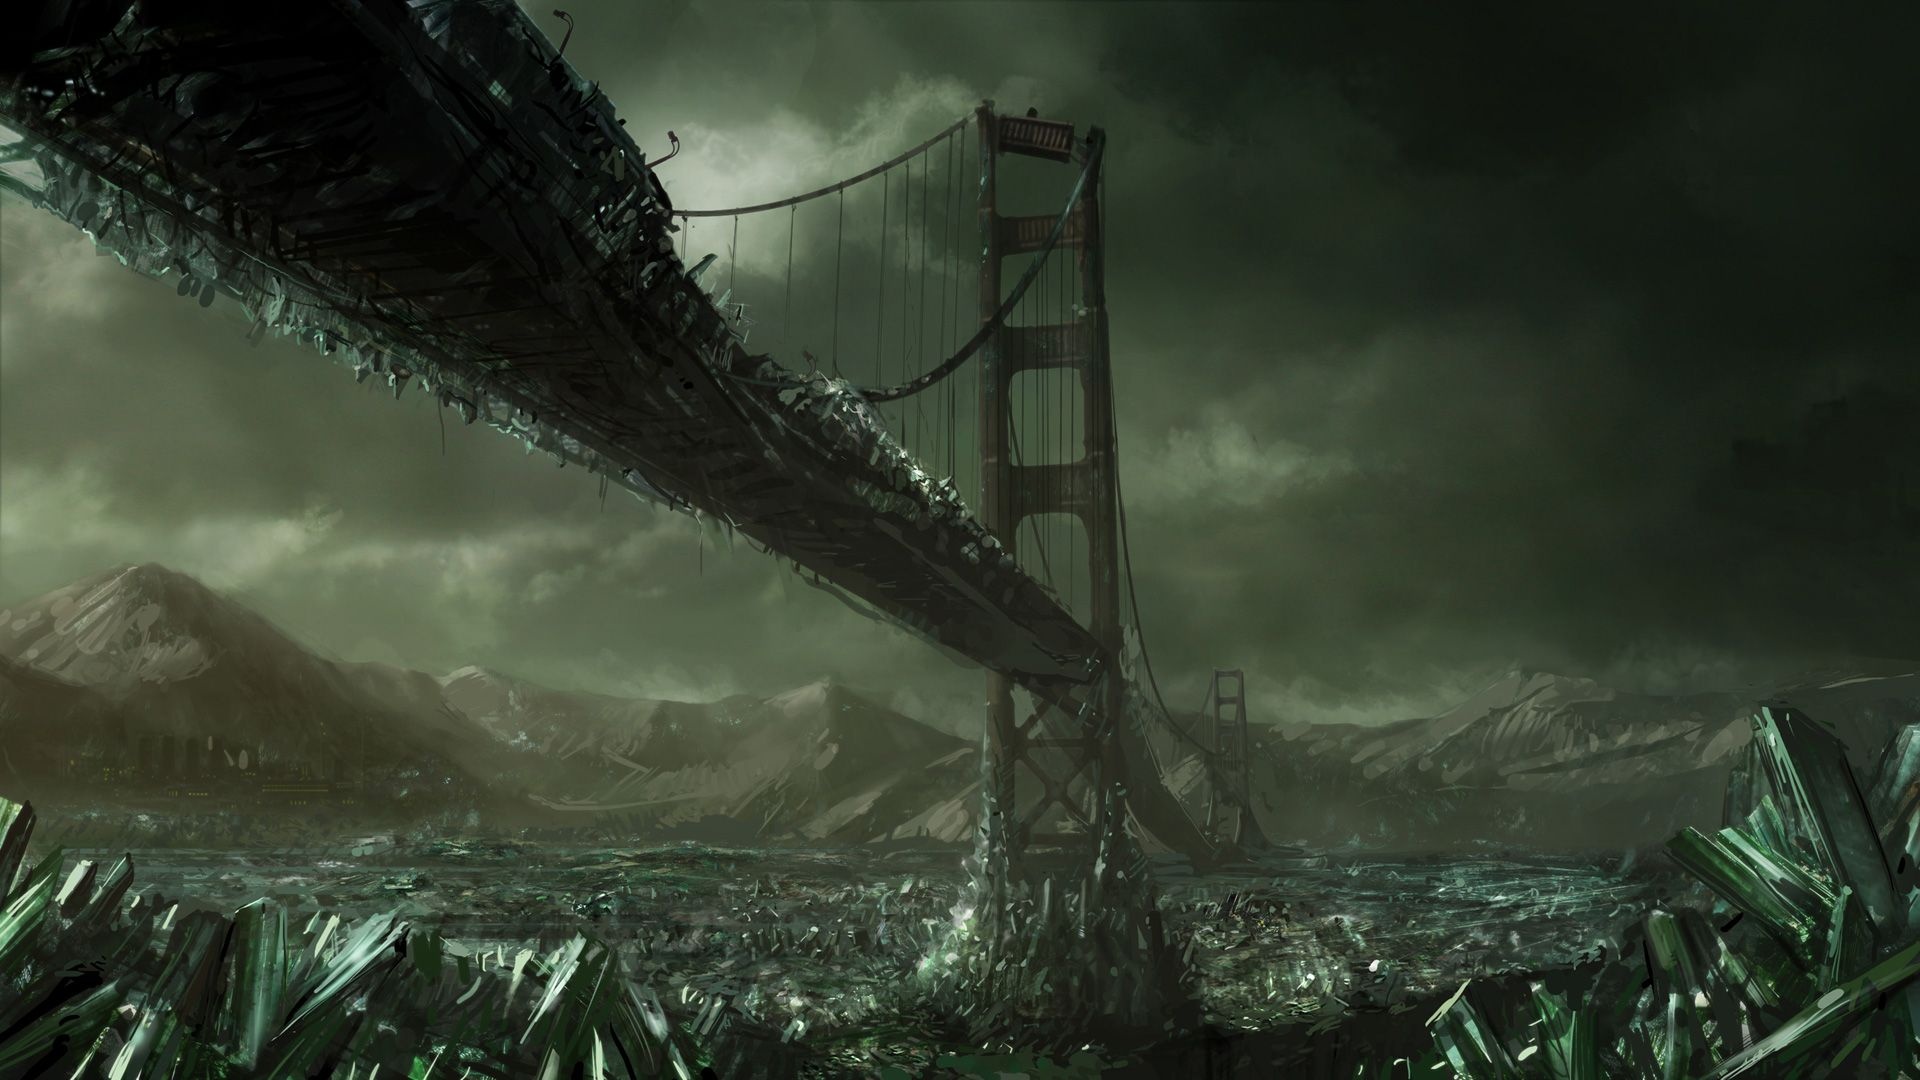 Gothic Art: Dark future, The Golden Gate Bridge, San Francisco Bay, Post-apocalyptic landscape, Destructions. 1920x1080 Full HD Background.